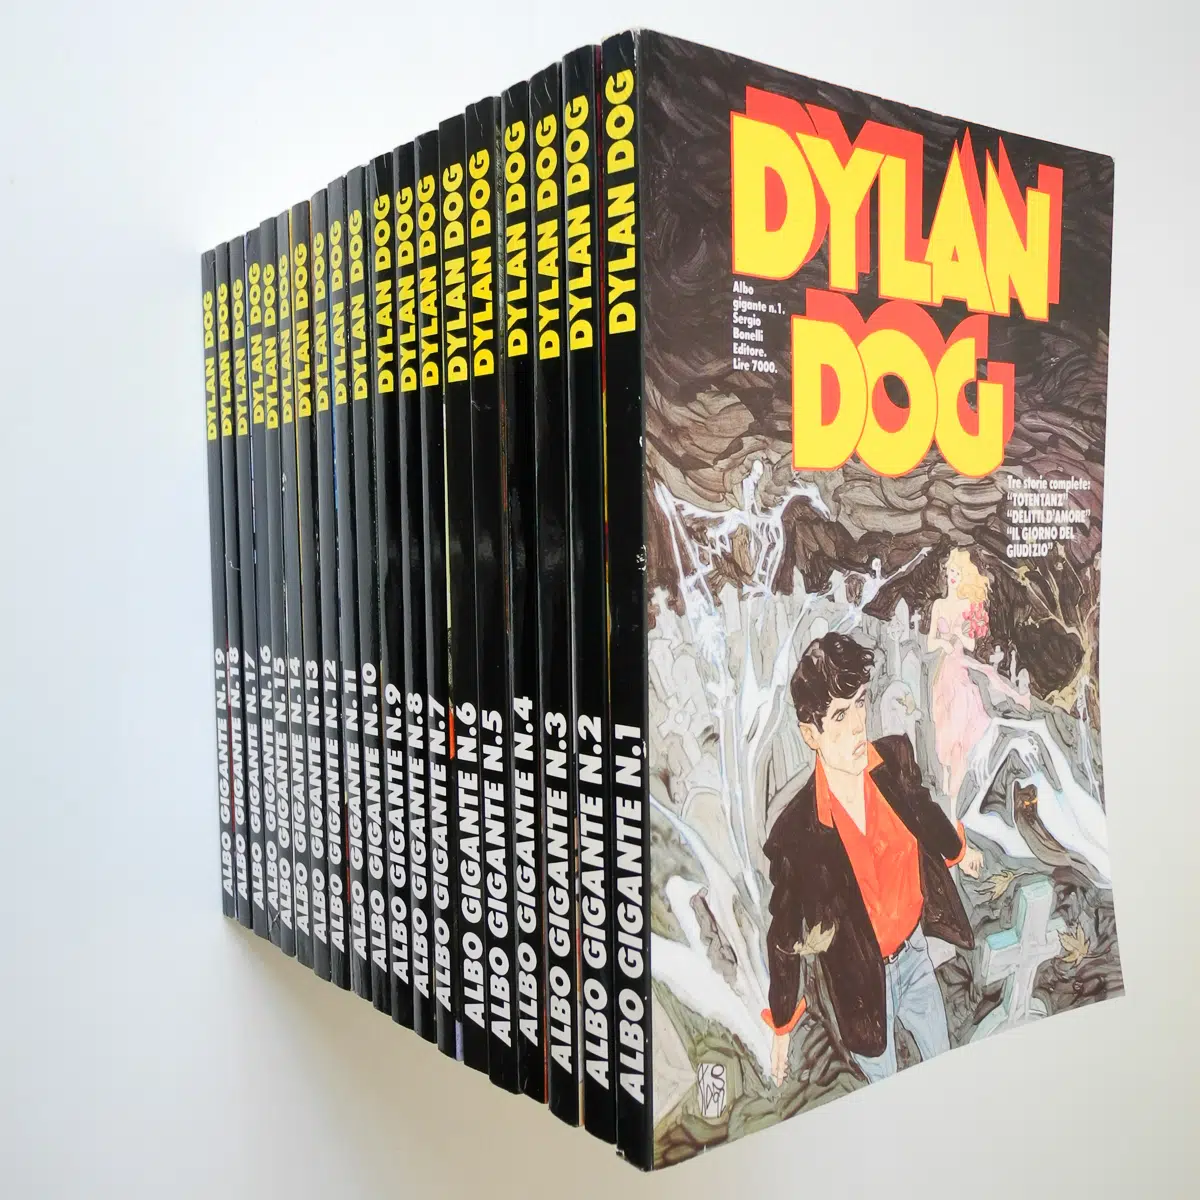 Dylan Dog Albo Gigante n. 1/19 Daim Press/Bonelli